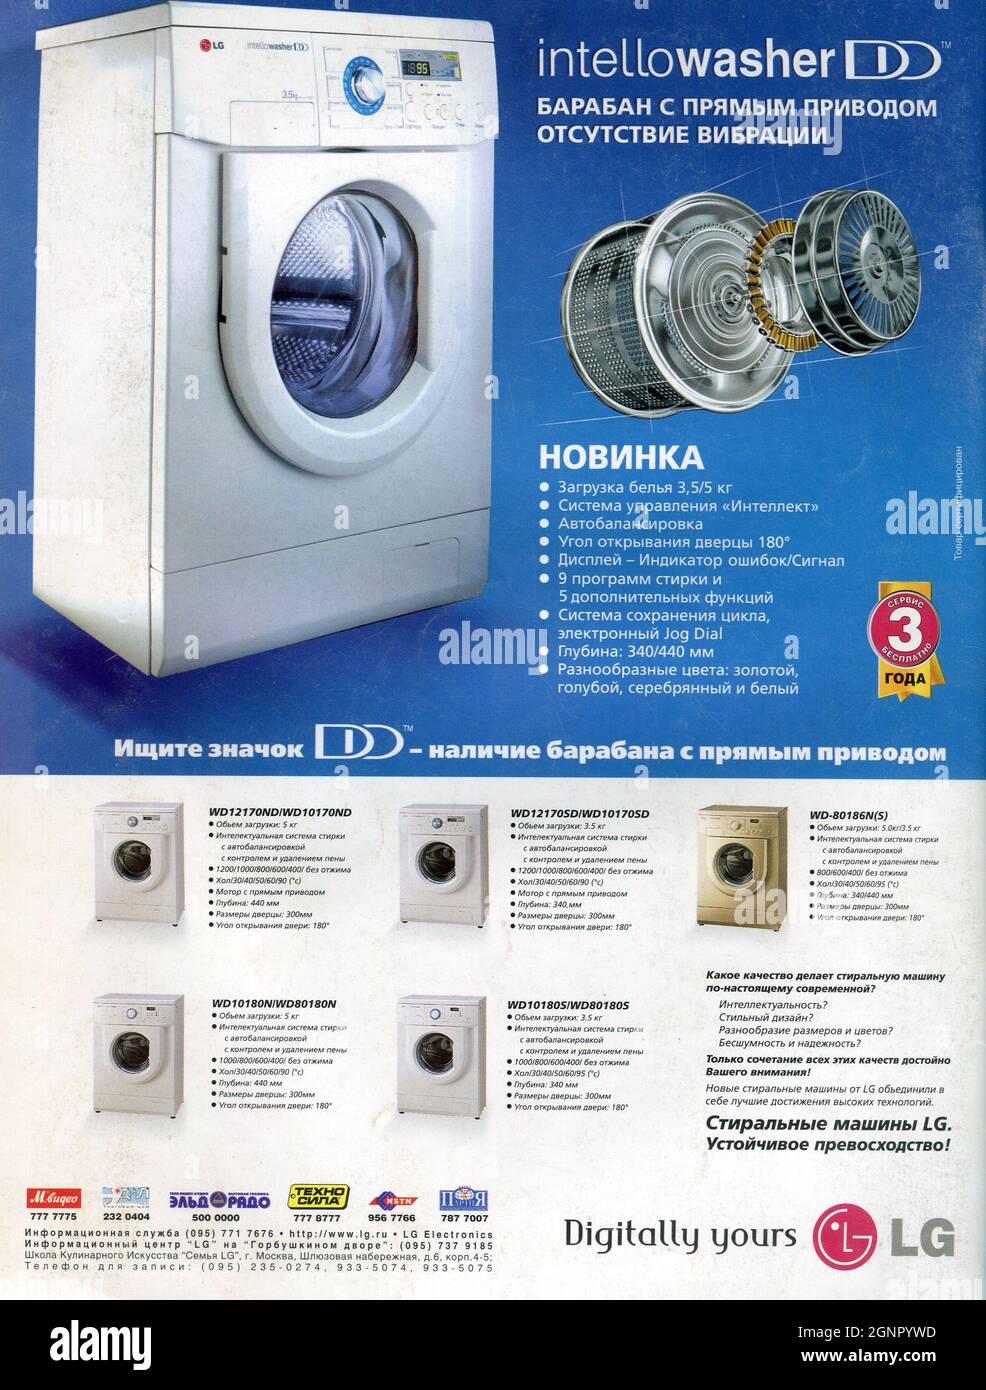 The inside of Russian magazine 'Burda' 11/2003. Stock Photo